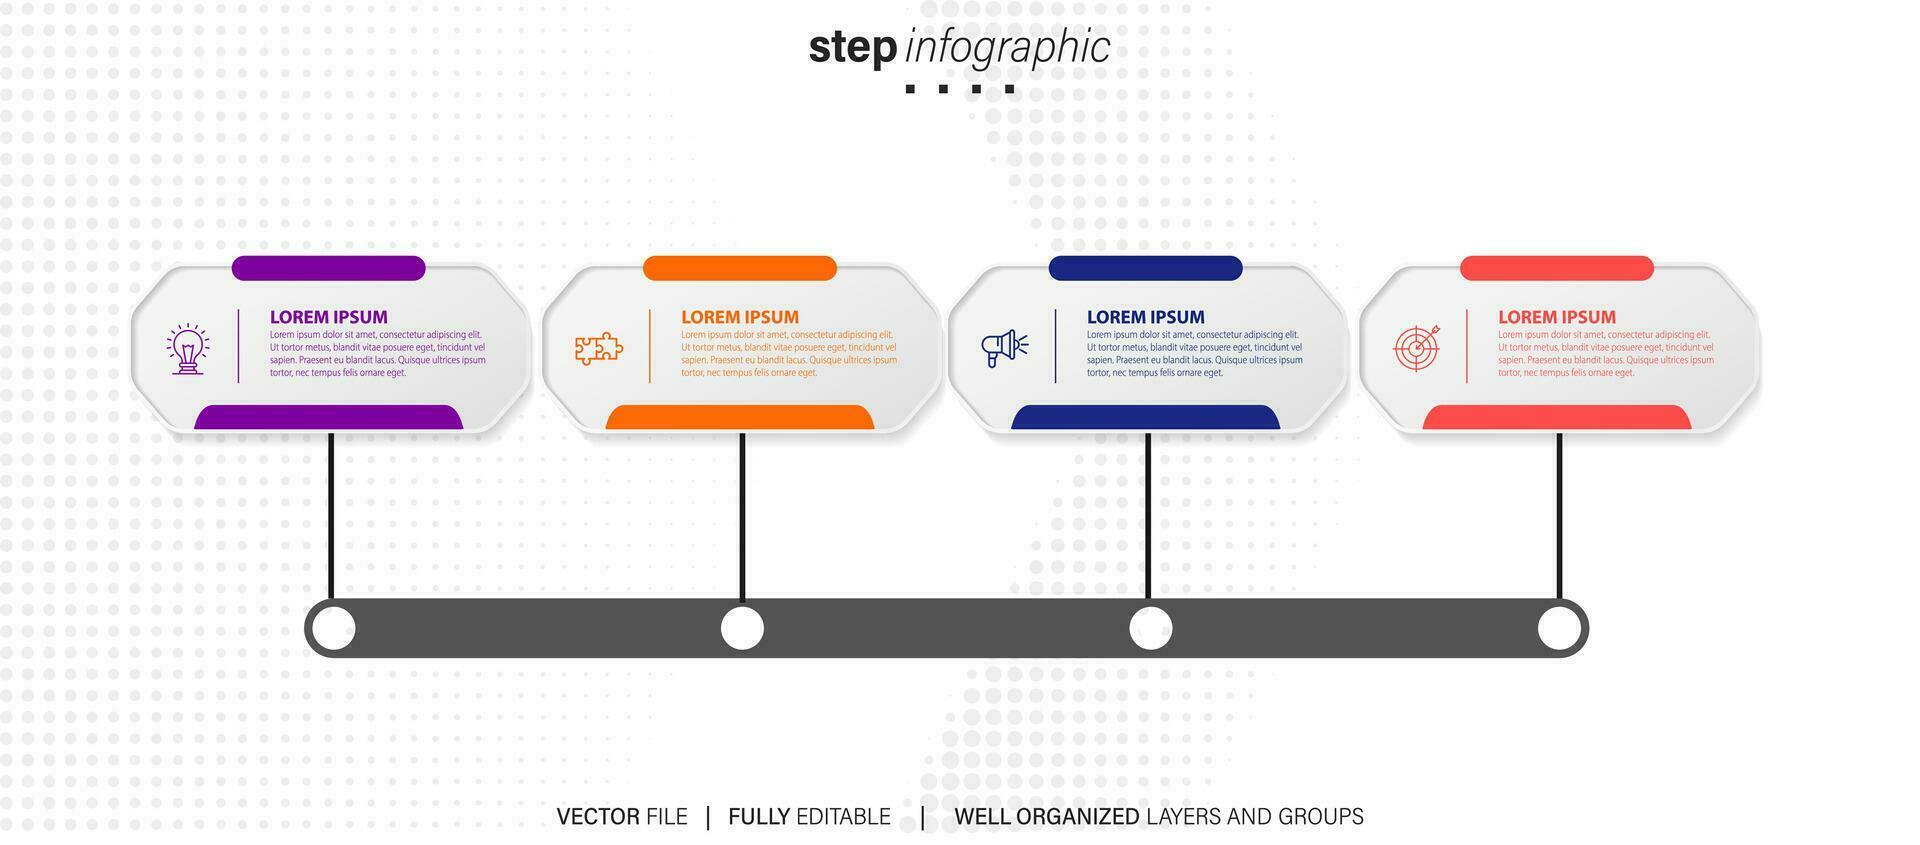 concepto de negocio modelo con 4 4 sucesivo pasos. cuatro vistoso gráfico elementos. cronograma diseño para folleto, presentación. infografía diseño diseño vector